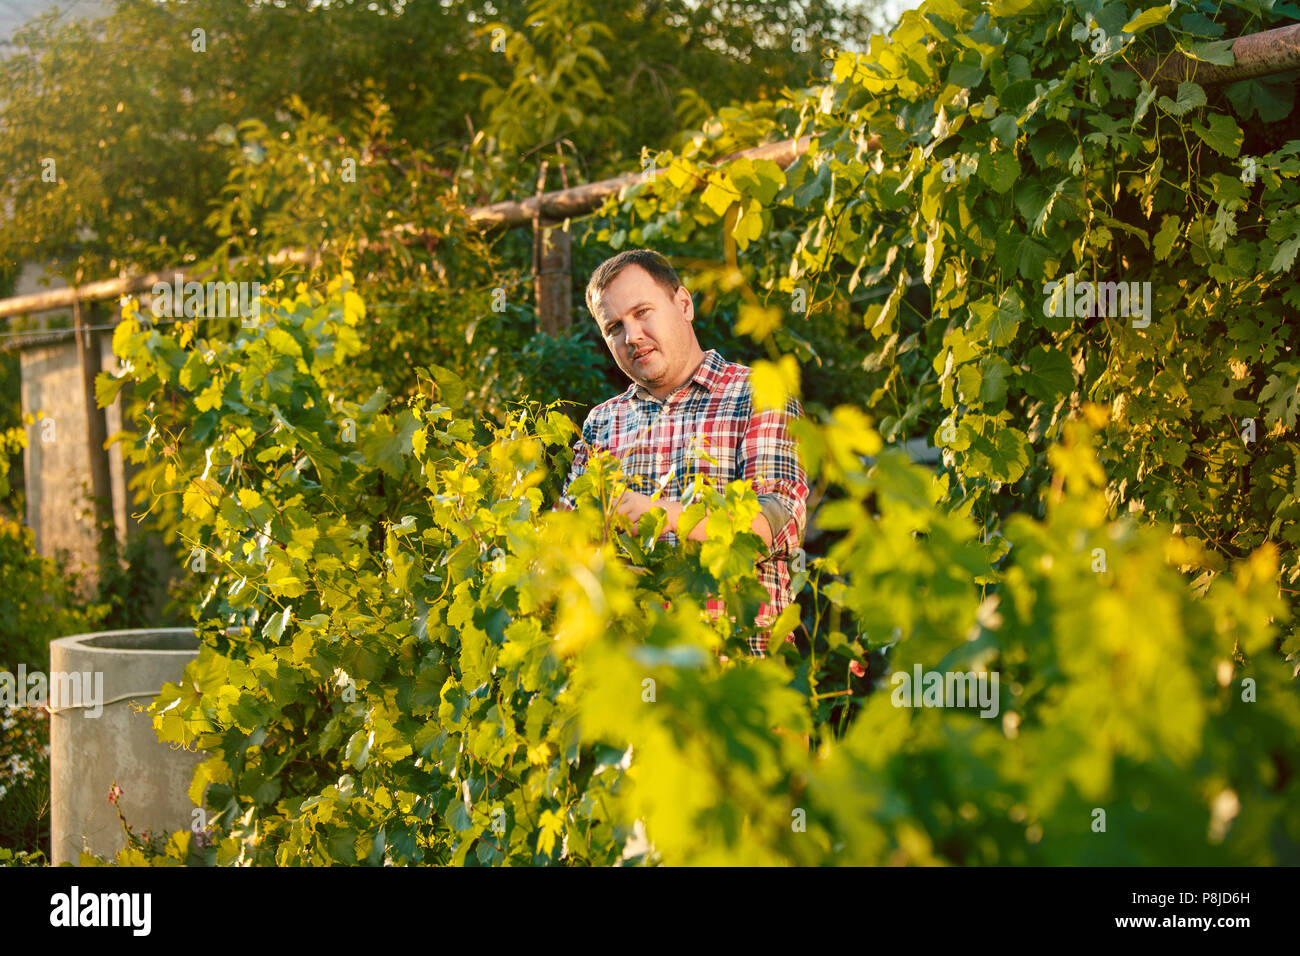 Mant prune grape brunch, work on a family farm Stock Photo